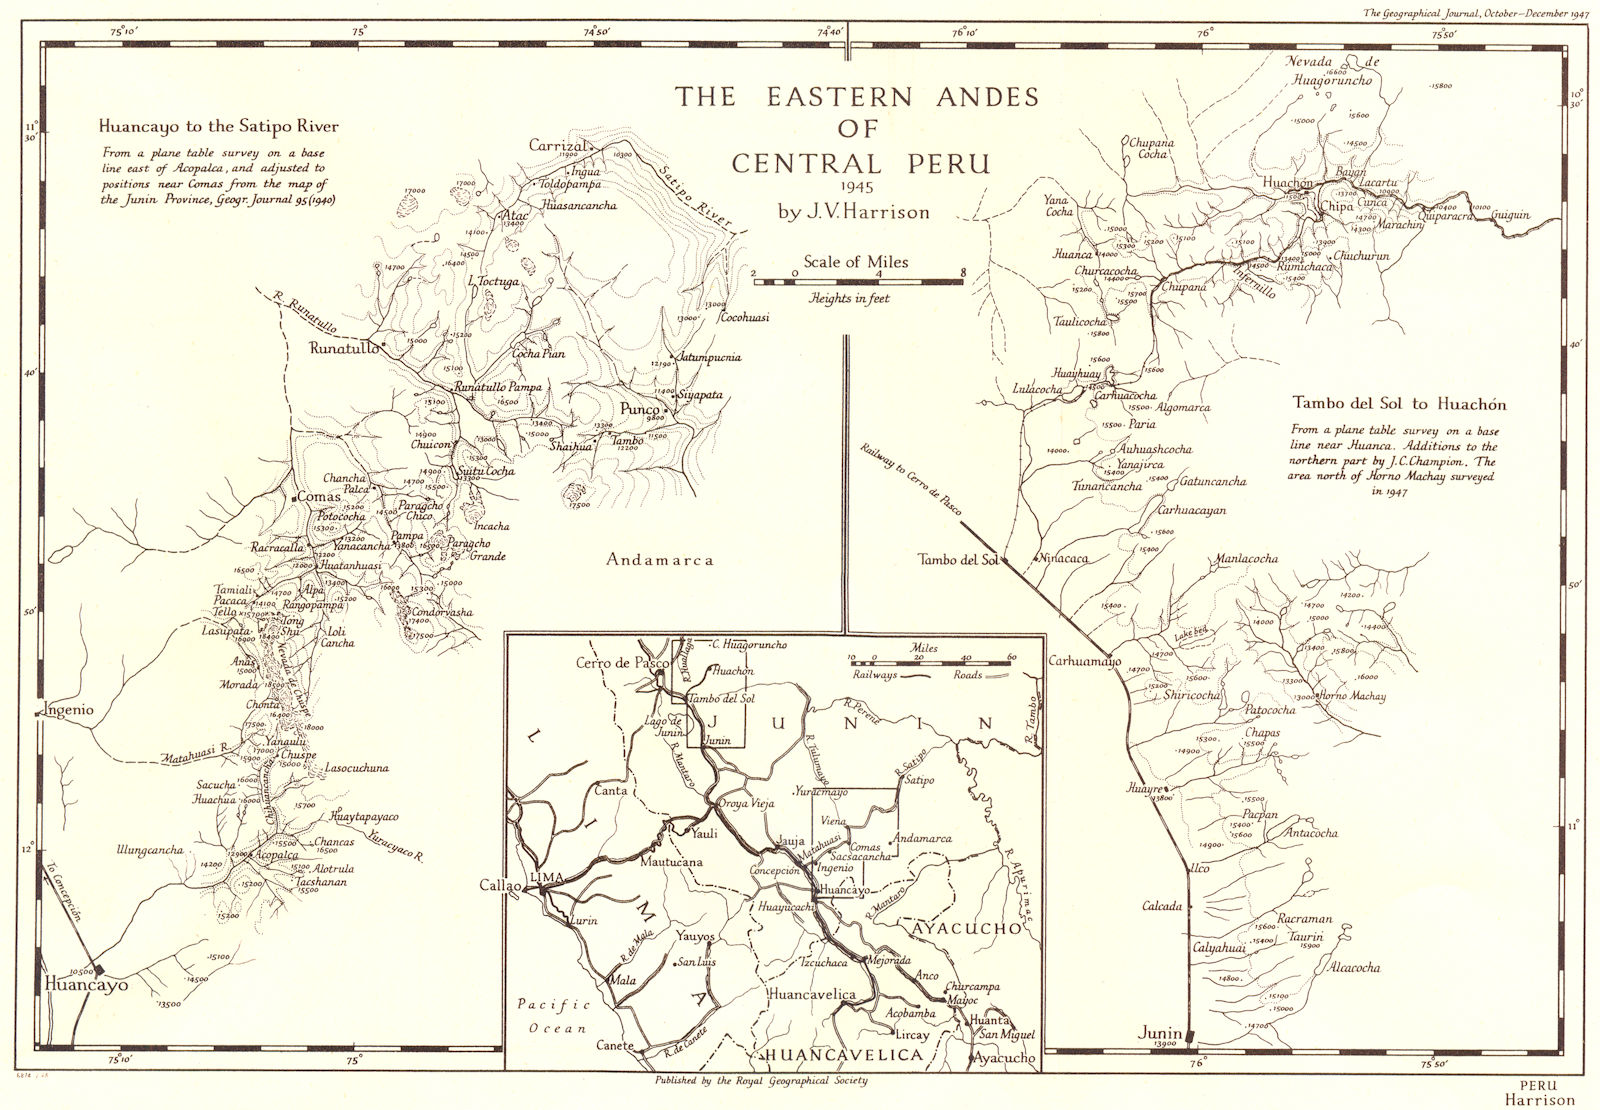 PERU. Eastern Andes 1945. Huancayo Satipo Tambo del Sol Haunchon. RGS map 1948